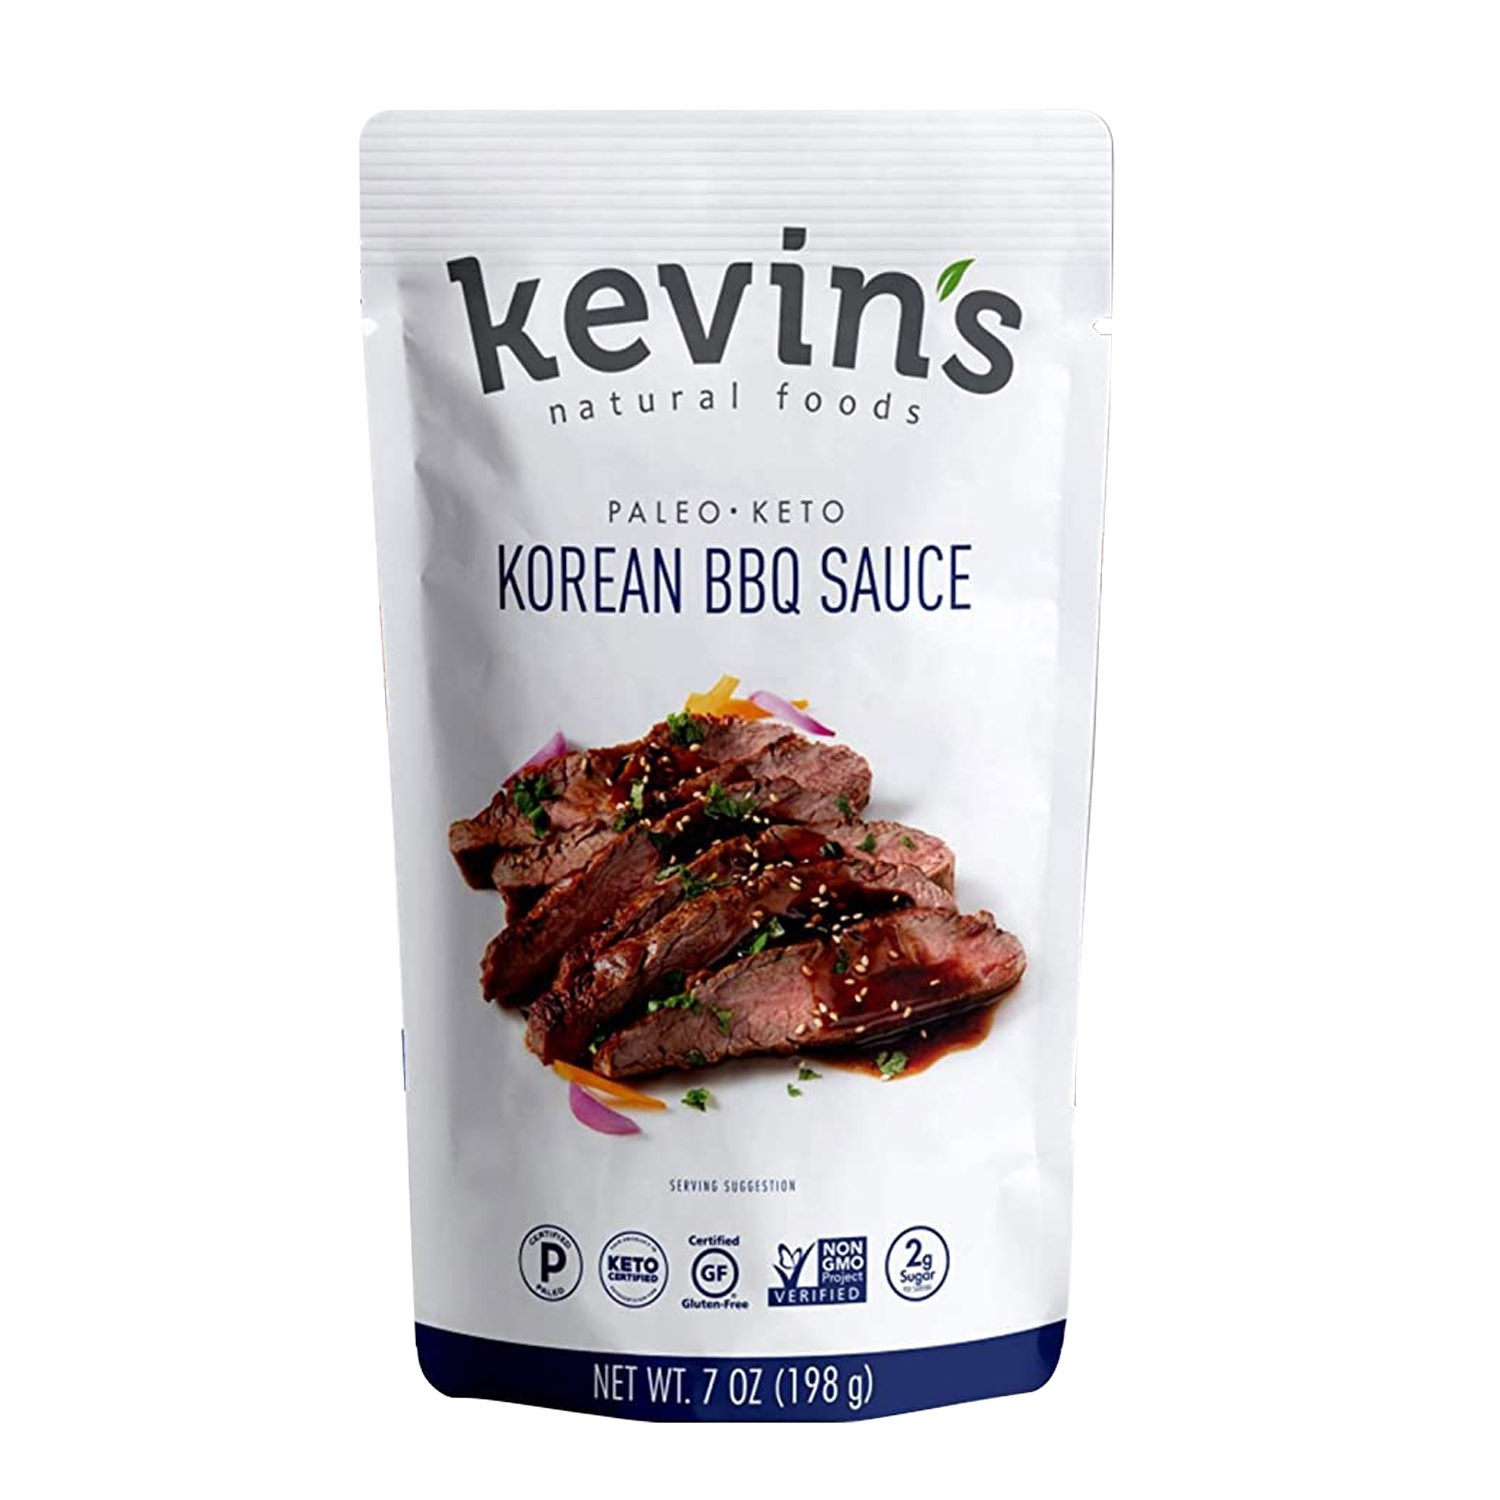 Kevin's Natural Foods - 美國生酮韓式燒烤醬 KOREN BBQ SAUCE